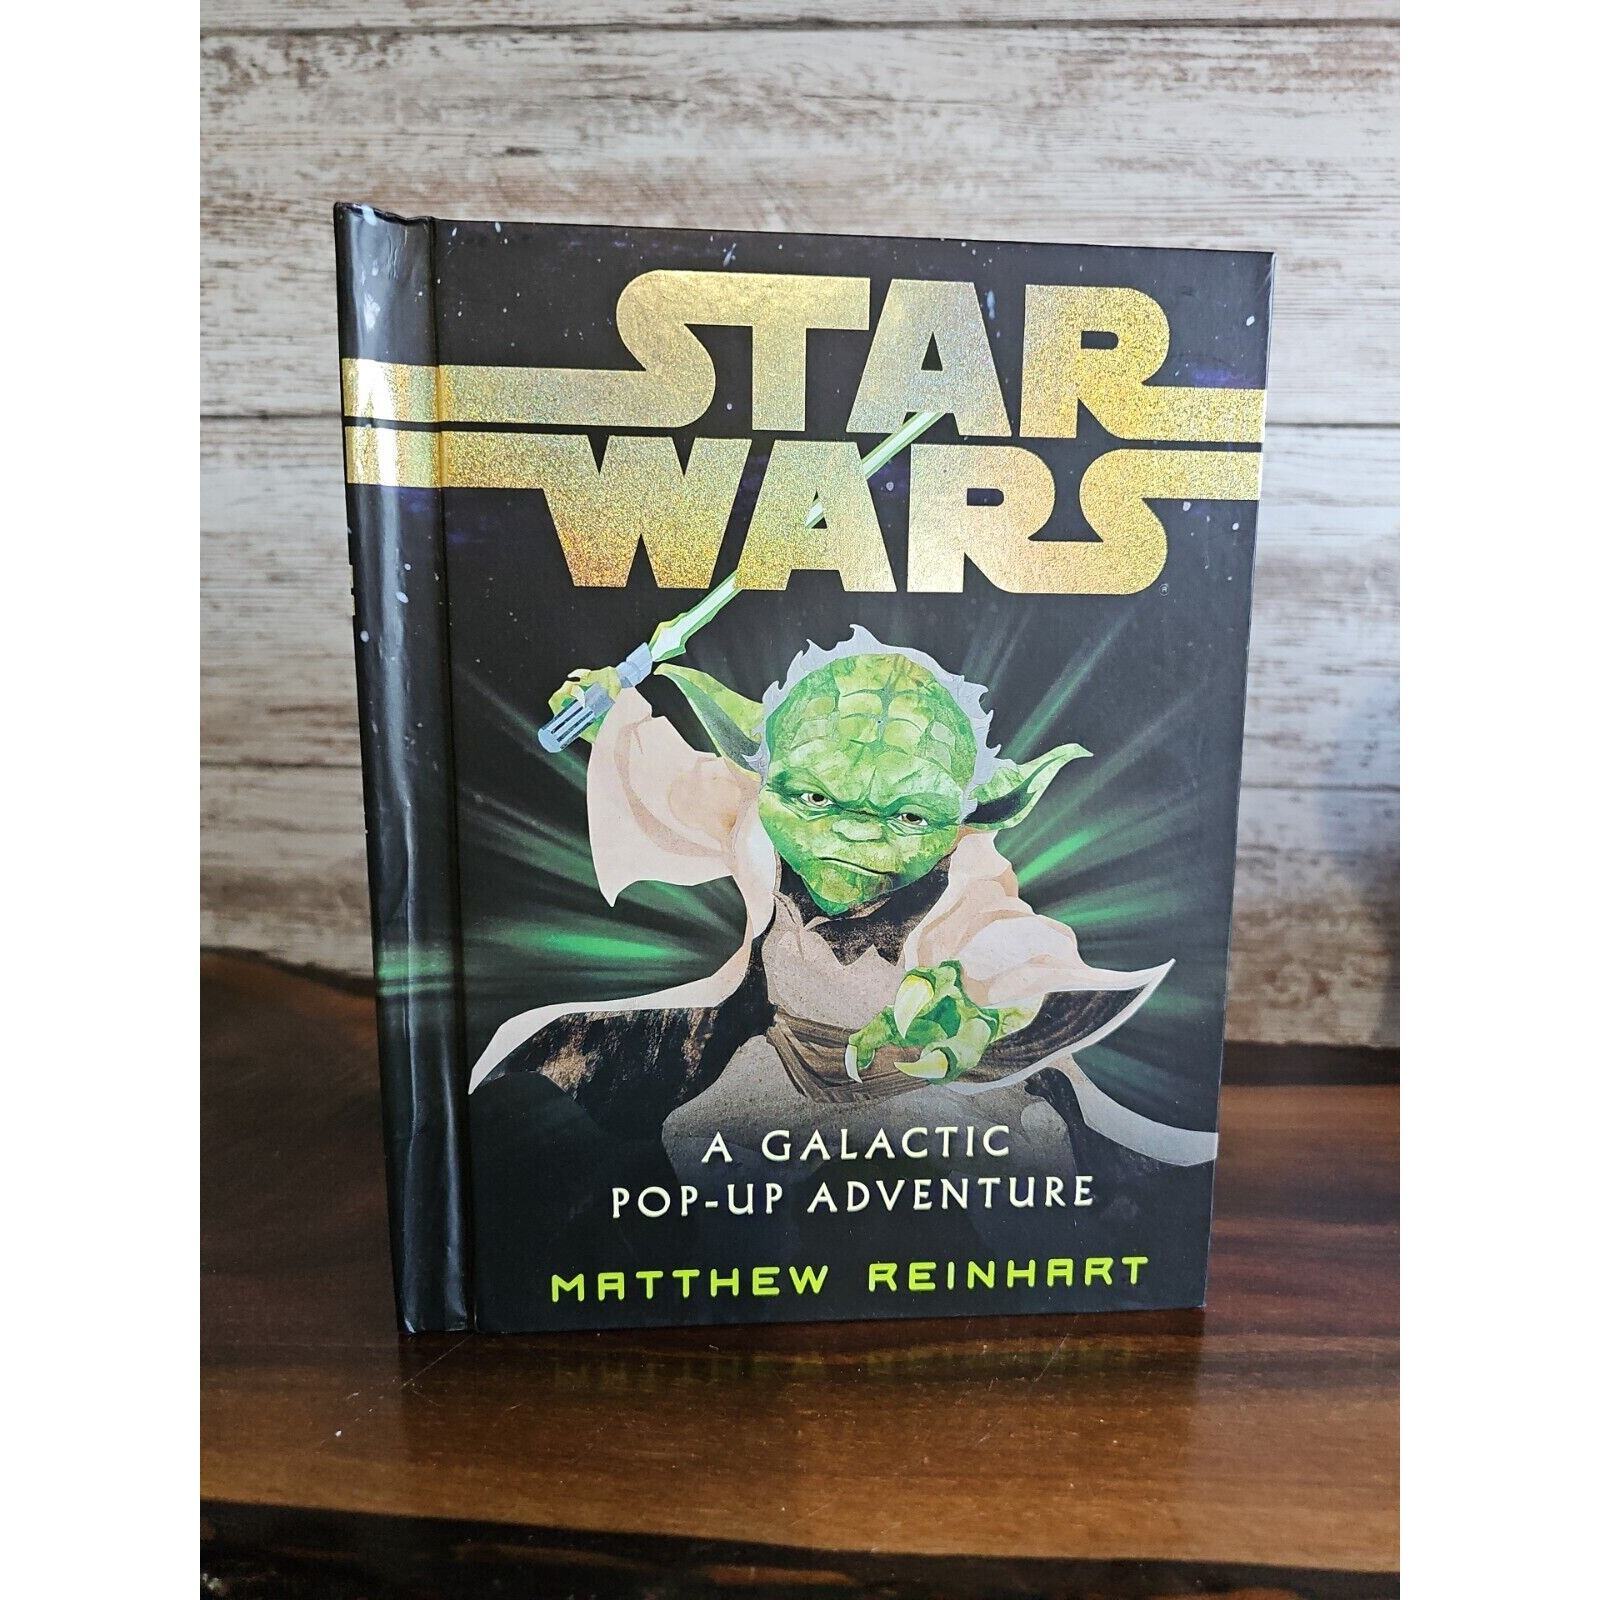 Star Wars A Galactic Pop-Up Adventure by Matthew Reinhart WORKS No Tears 